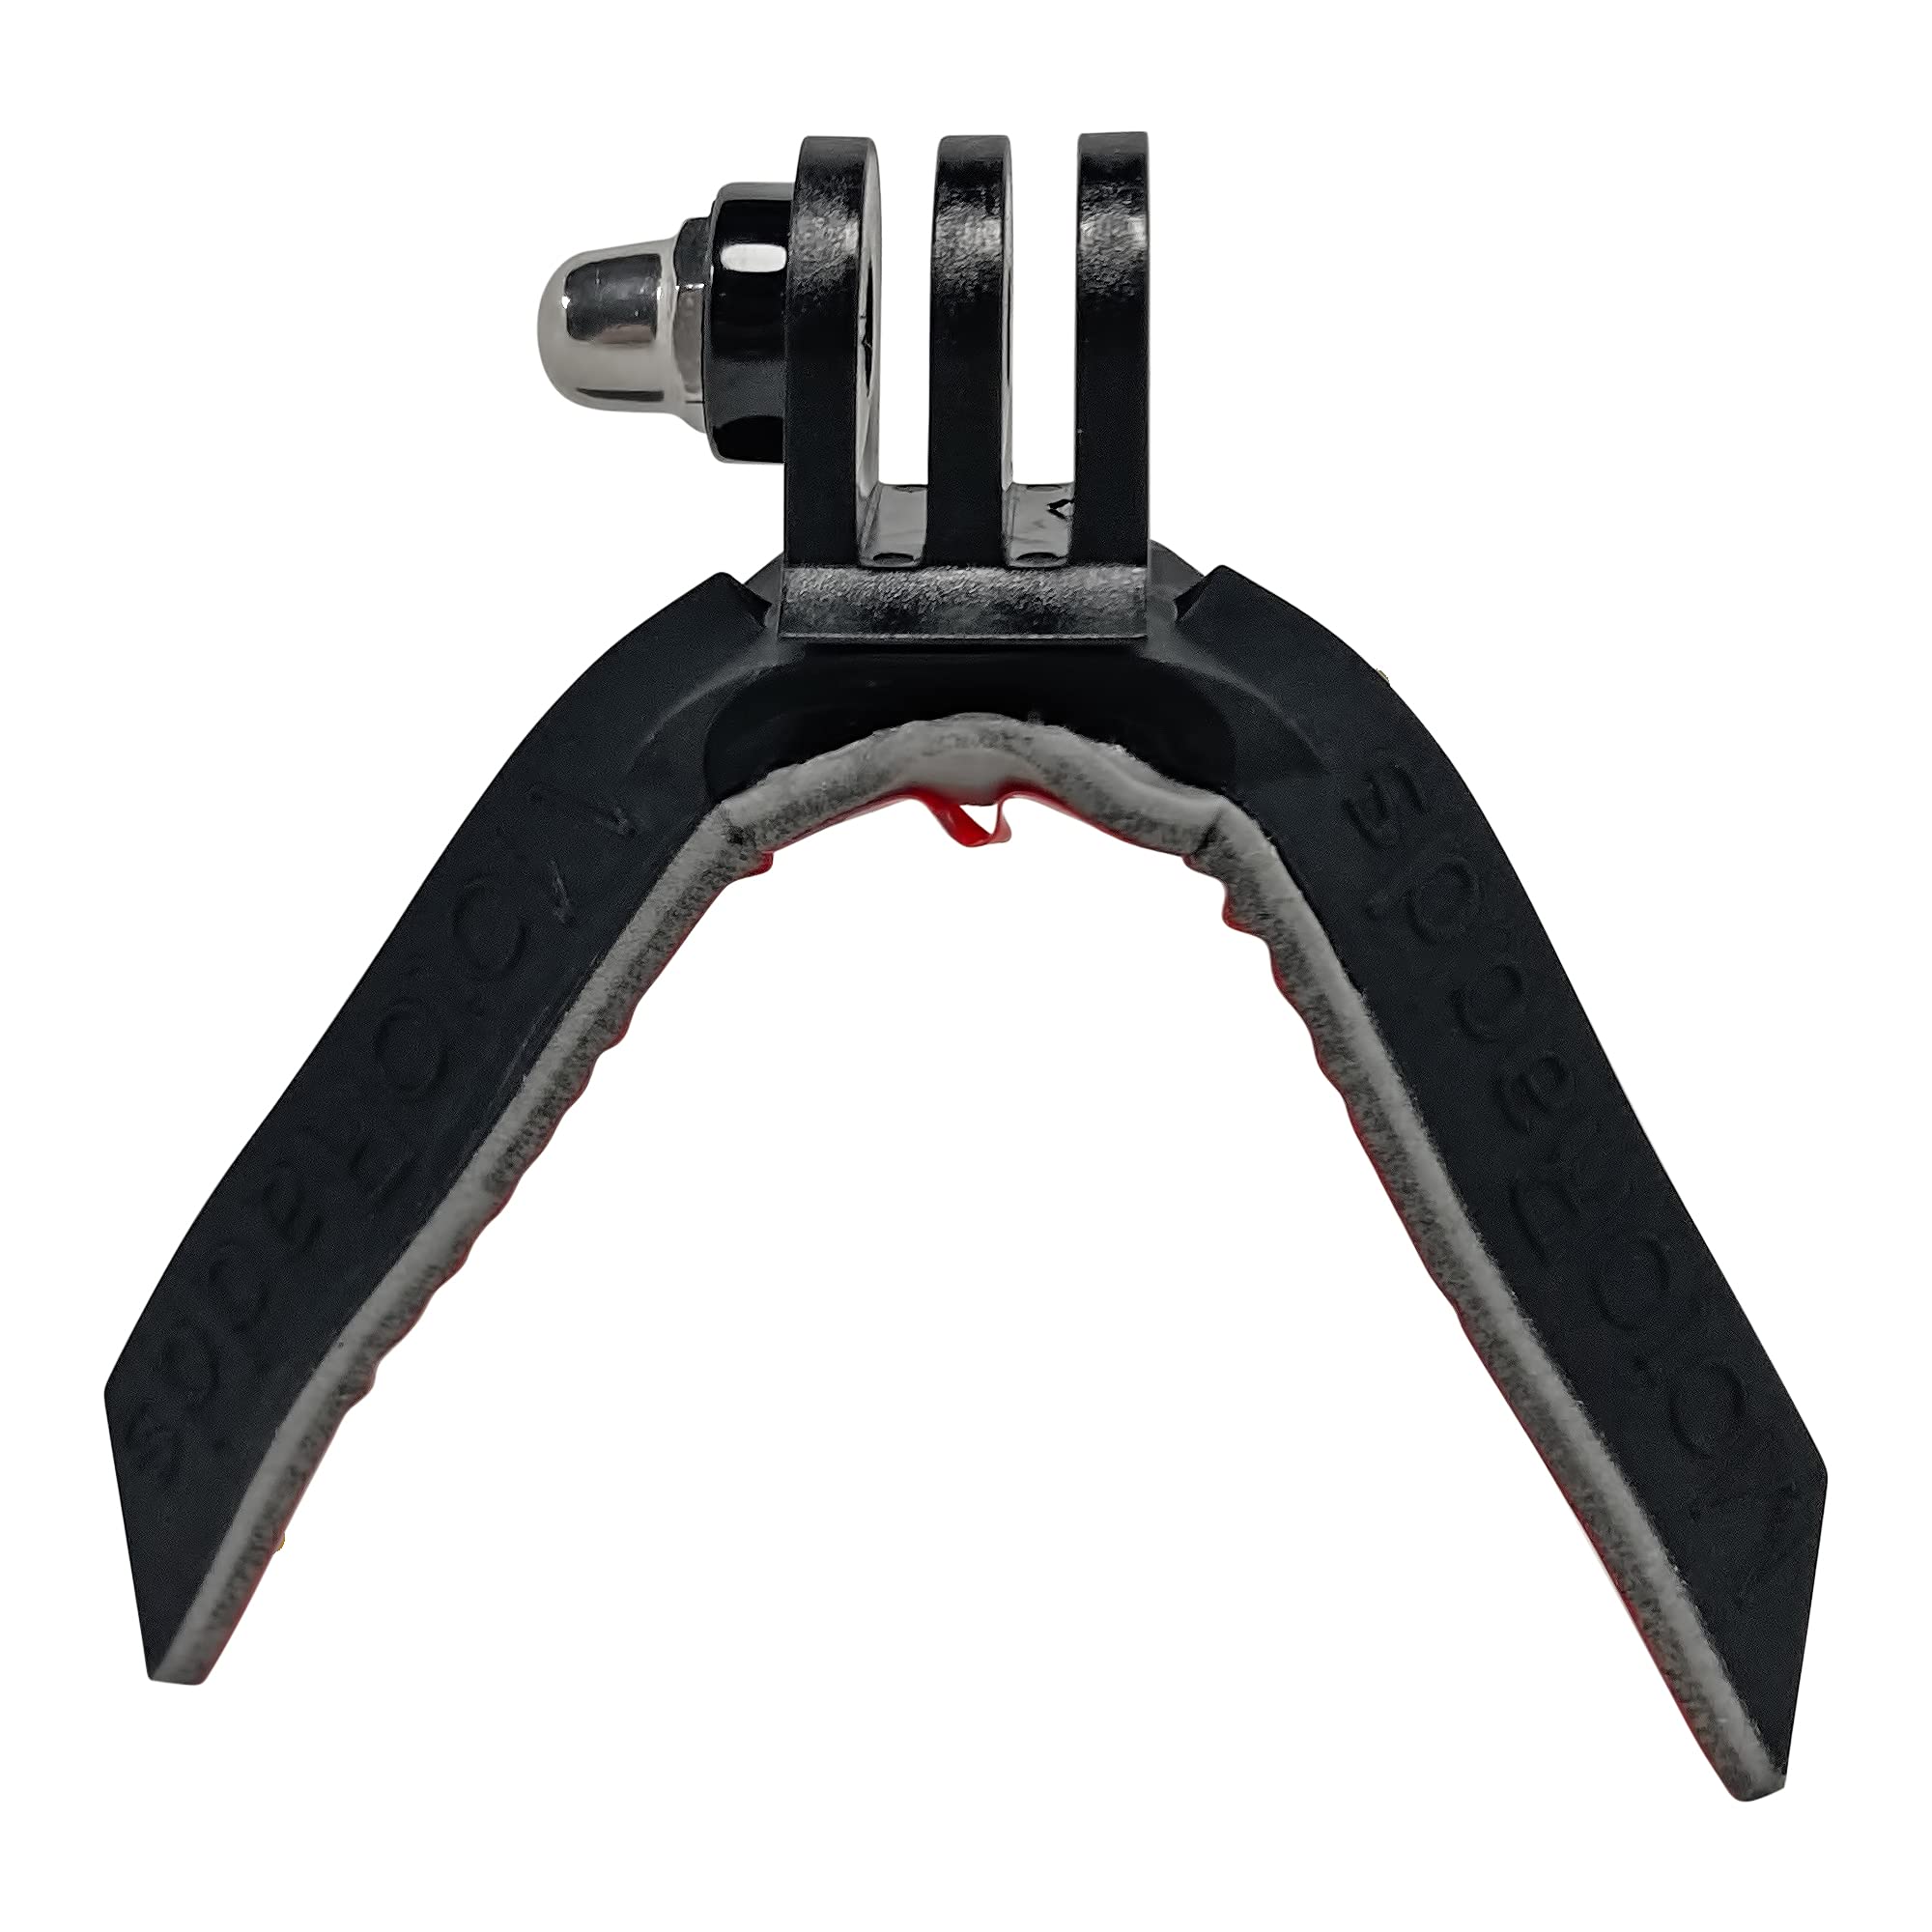 MotoRadds Flex Slim Flexible Universal Motorcycle Helmet Chin Mount Kit Bendable Silicone Compatible with GoPro Hero 12, 11, 10, DJI Osmo Action, Insta360, SJCAM, Xiaomi Yi Action Cameras (White)